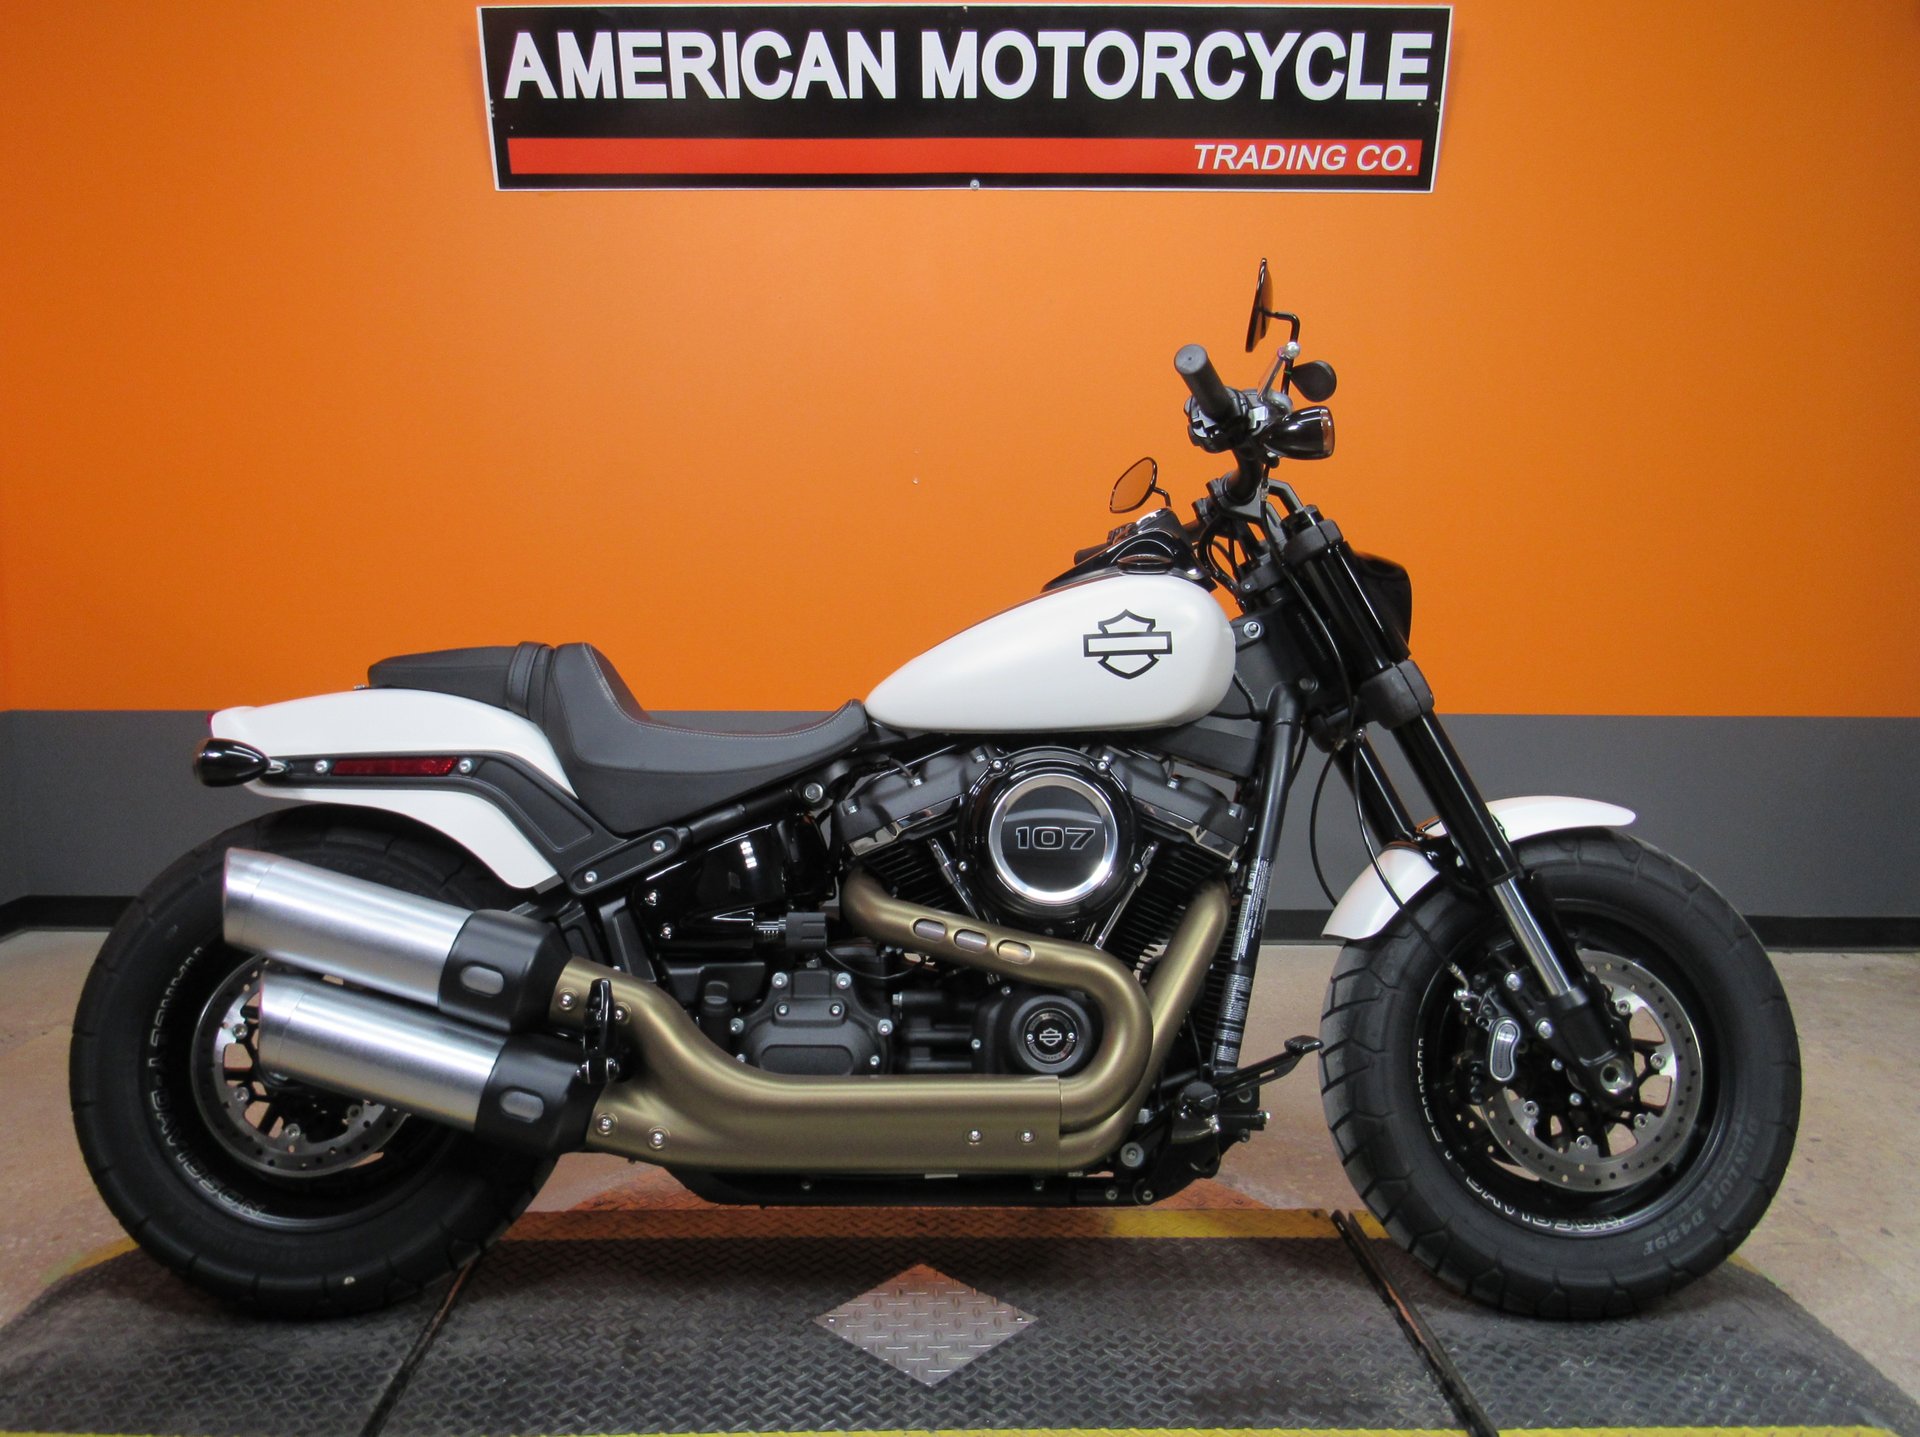 2018 Harley-Davidson Softail Fat Bob | American Motorcycle Trading Company  - Used Harley Davidson Motorcycles